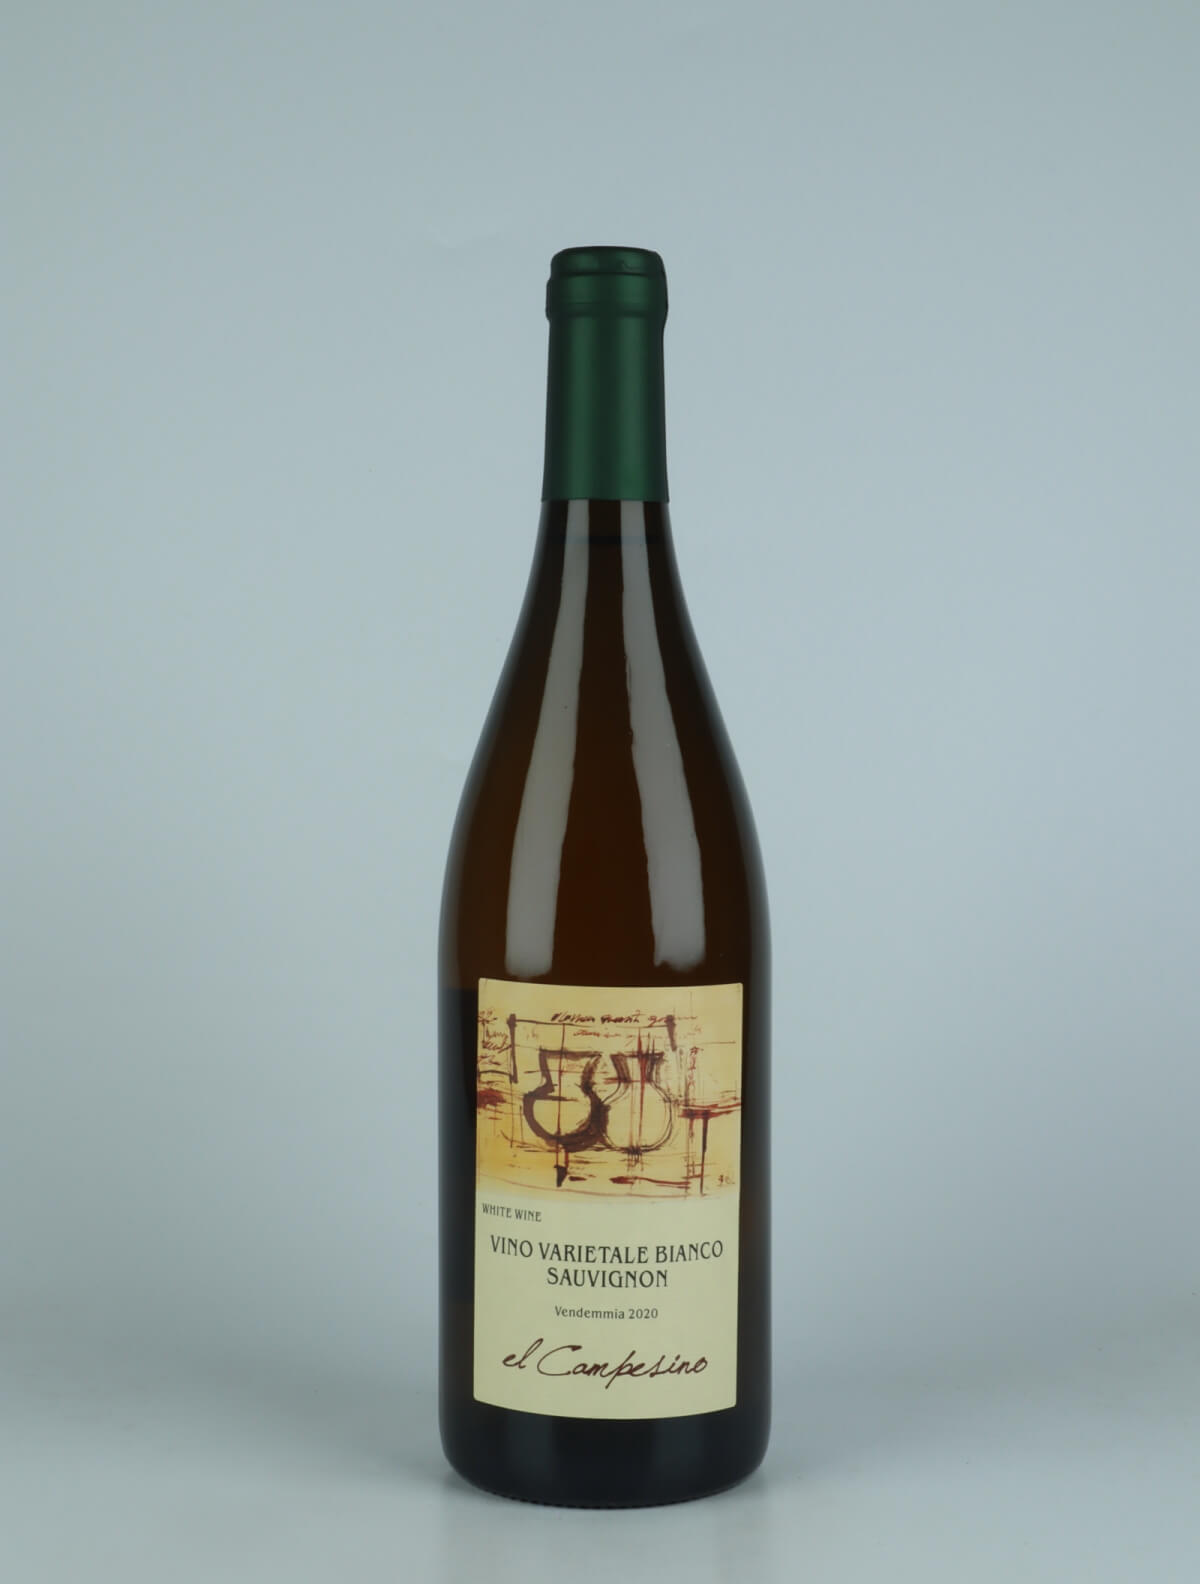 En flaske 2020 El Campesino Orange vin fra Andrea Scovero, Piemonte i Italien